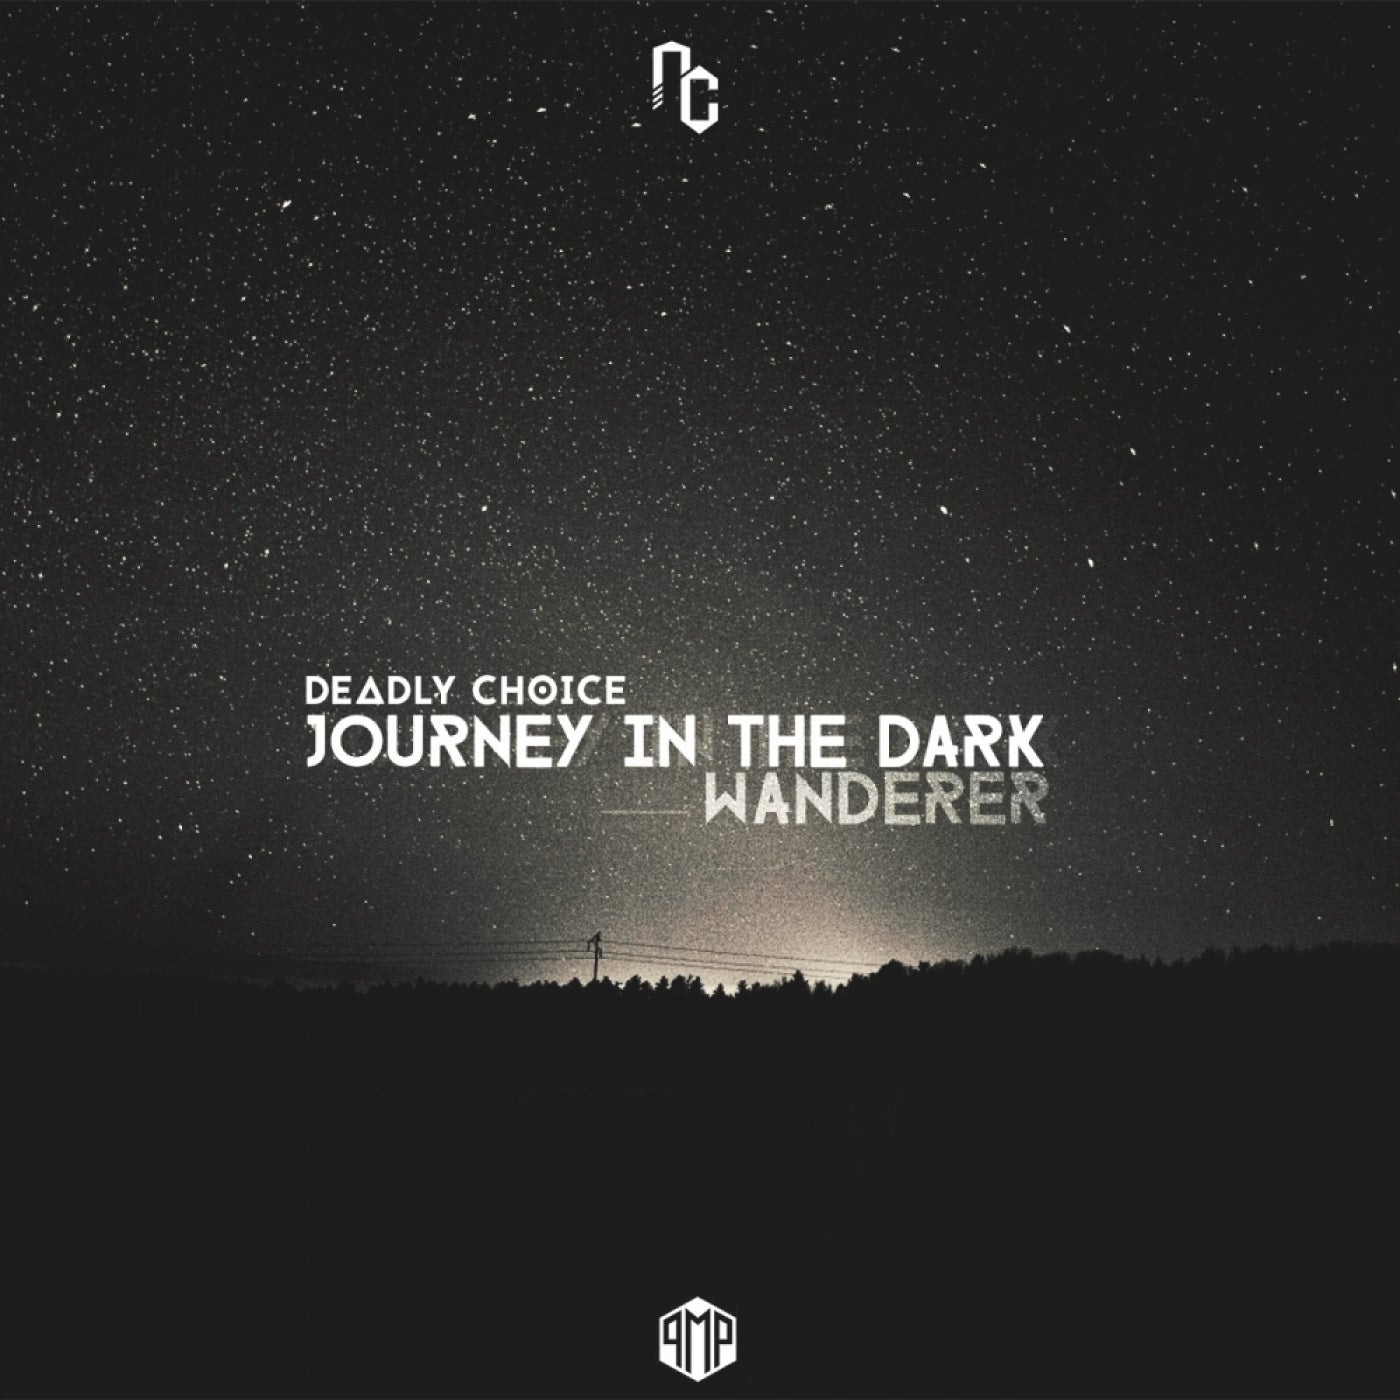 The Journey In The Dark / Wanderer